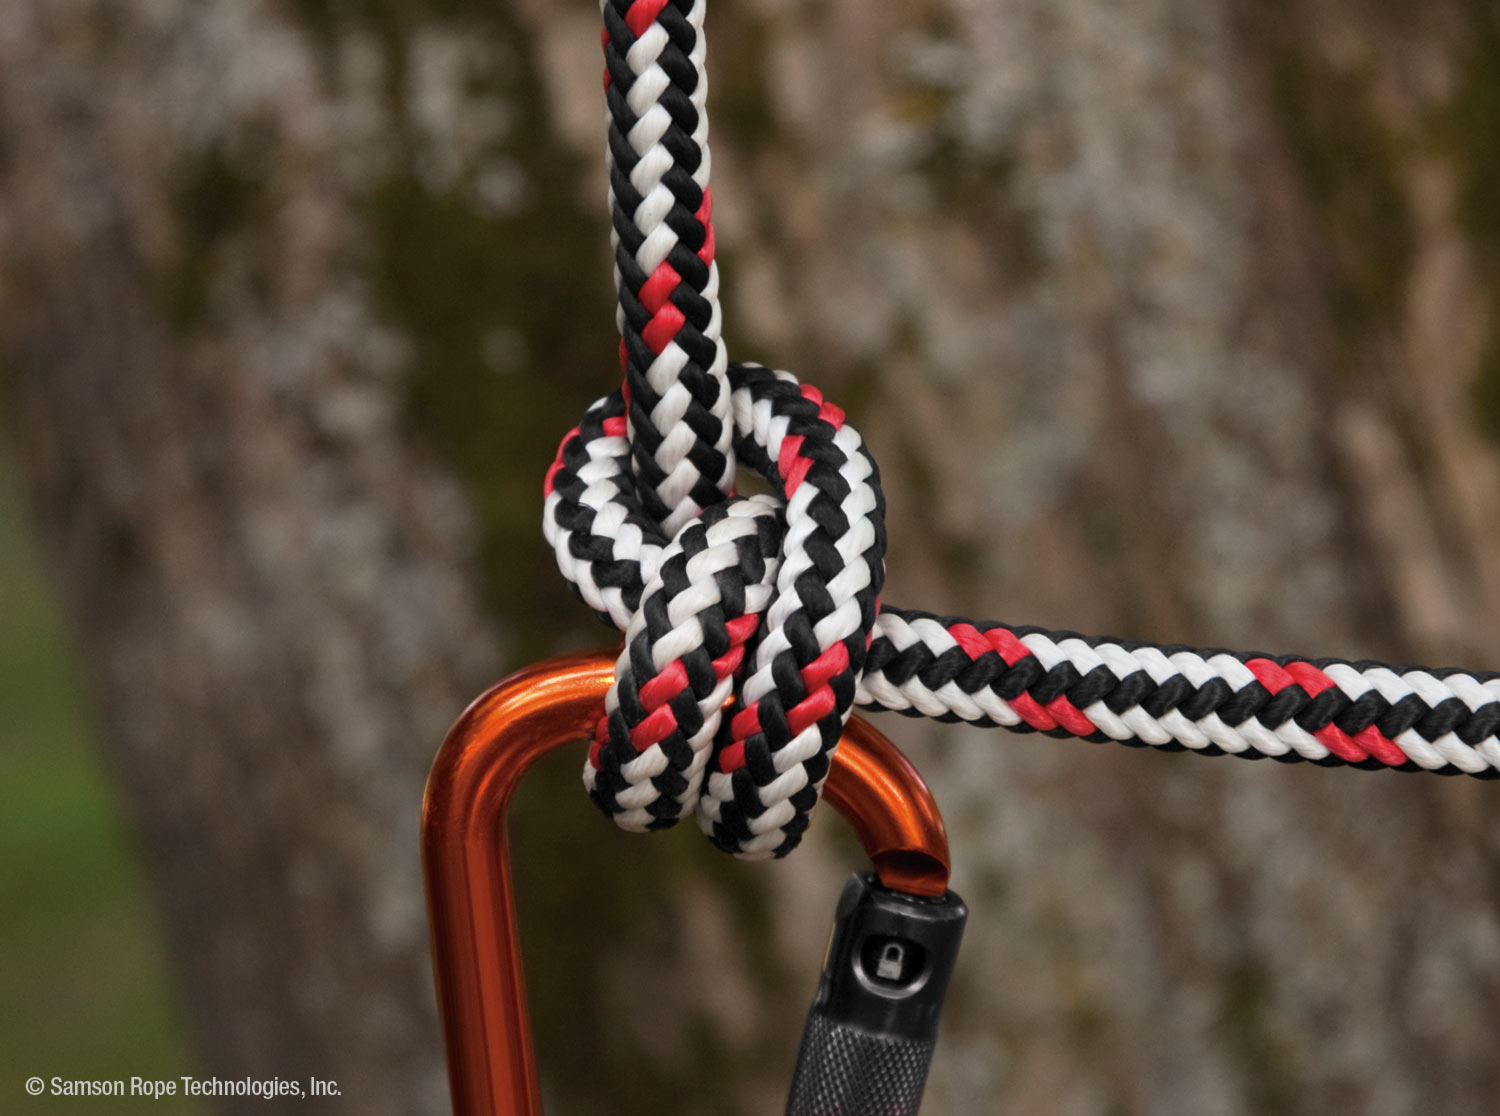 Rock Climbing Knots, Rope Knots